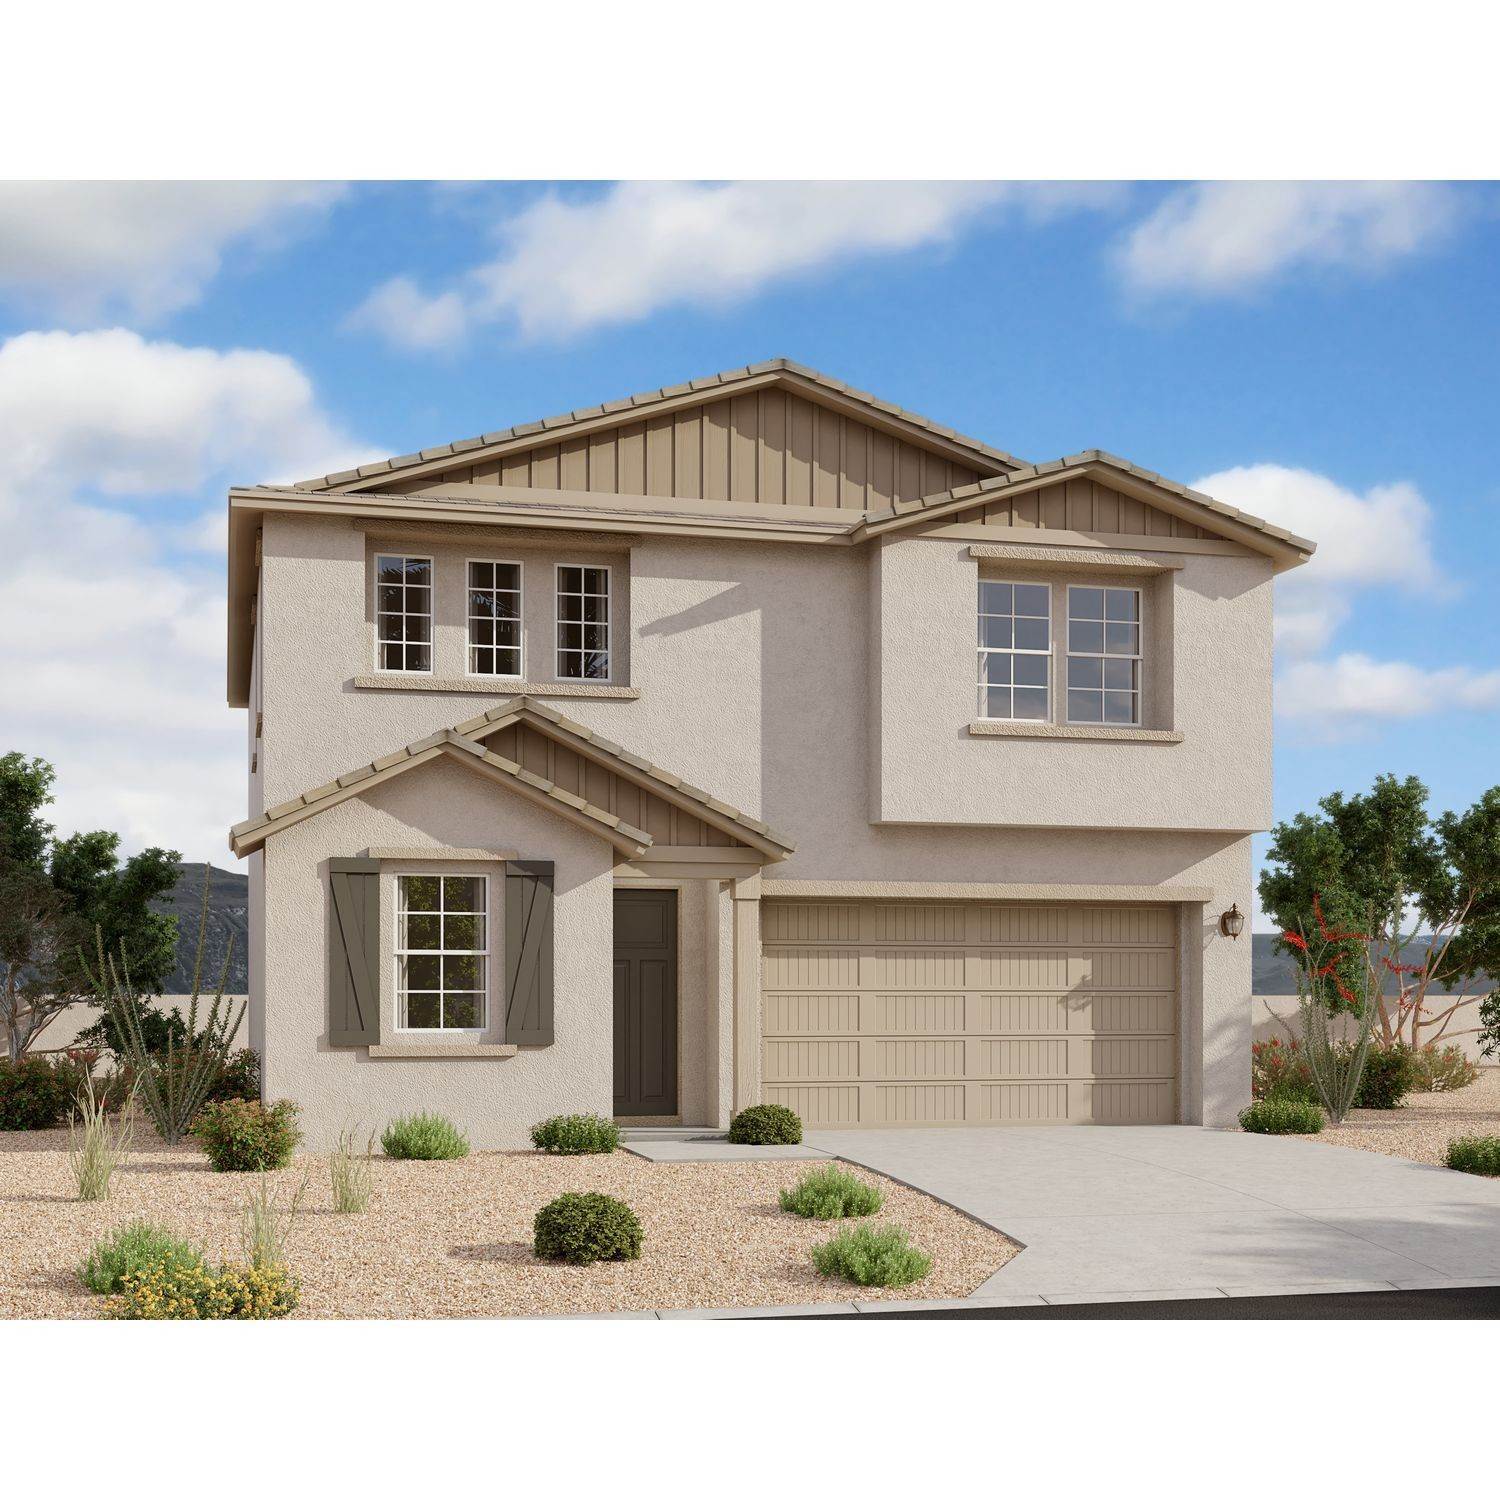 3. Single Family for Sale at Eastmark 9619 E Solina Ave, Mesa, AZ 85212